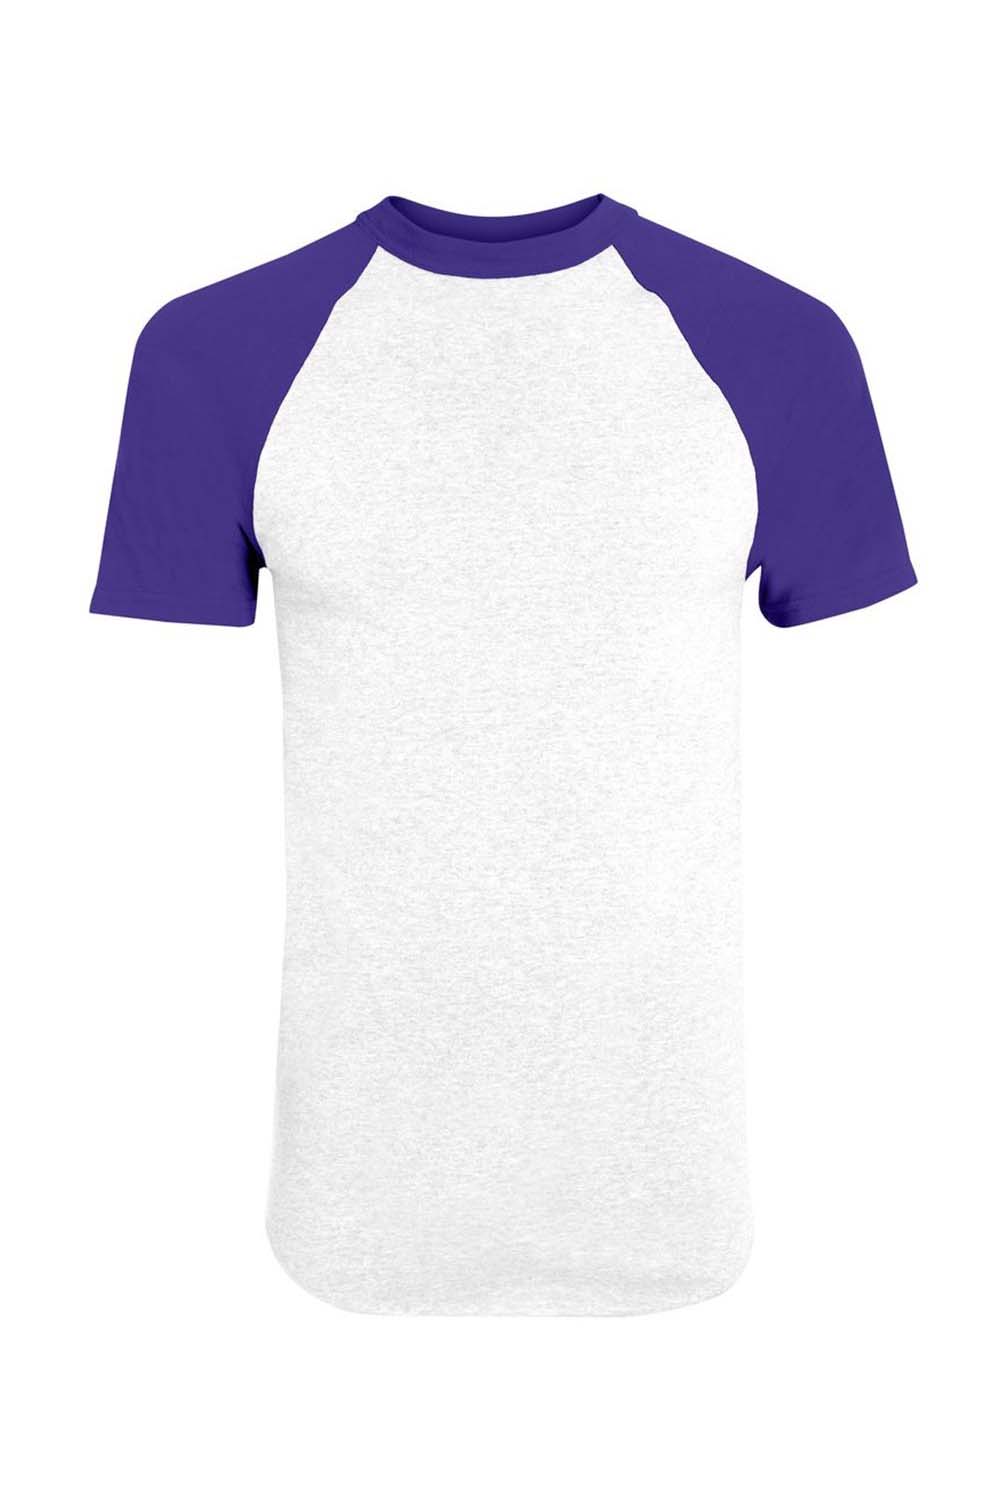 Augusta Sportswear 423 Mens Short Sleeve Crewneck T-Shirt White/Purple Model Flat Front